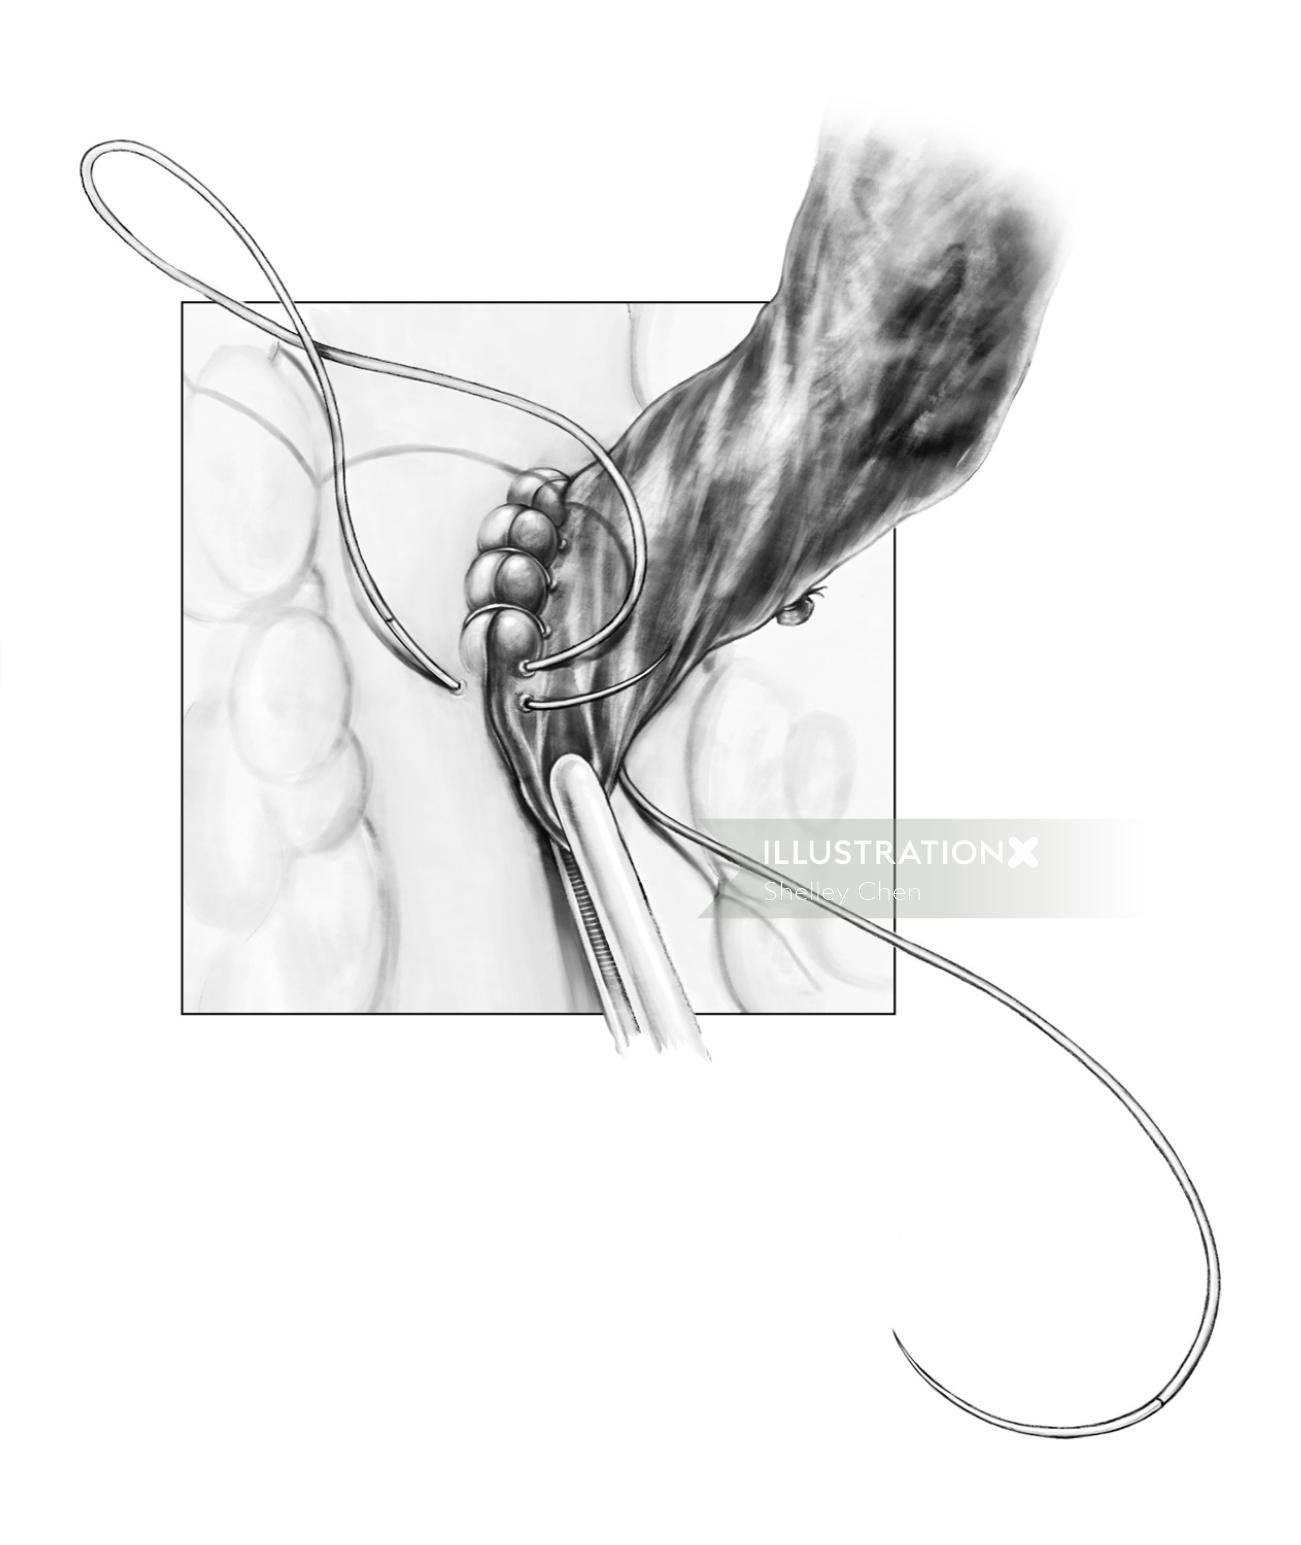 Illustration de la procédure de chirurgie de pontage coronarien par Shelley Li Wen Chen